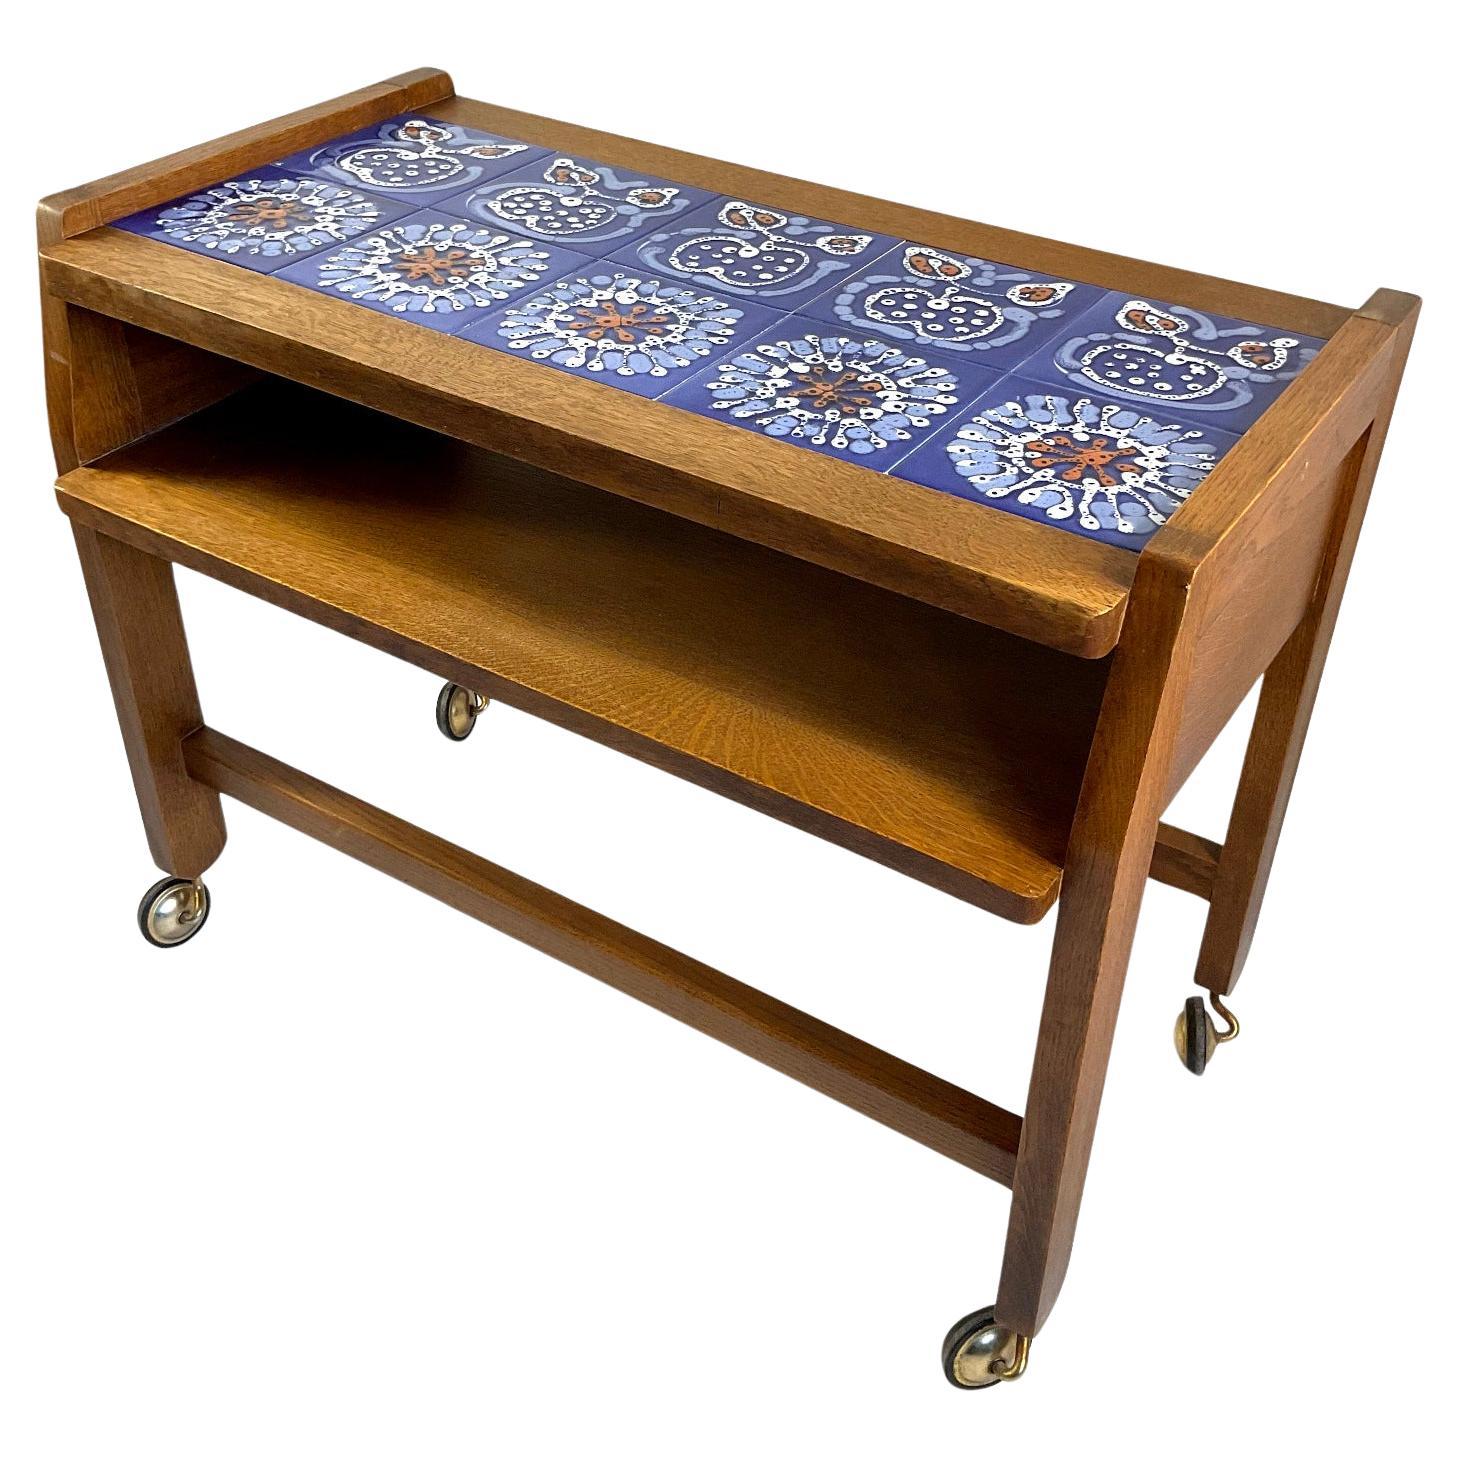 1960s Guillerme et Chambron Oak Side Table with Blue Ceramics Tiles Top